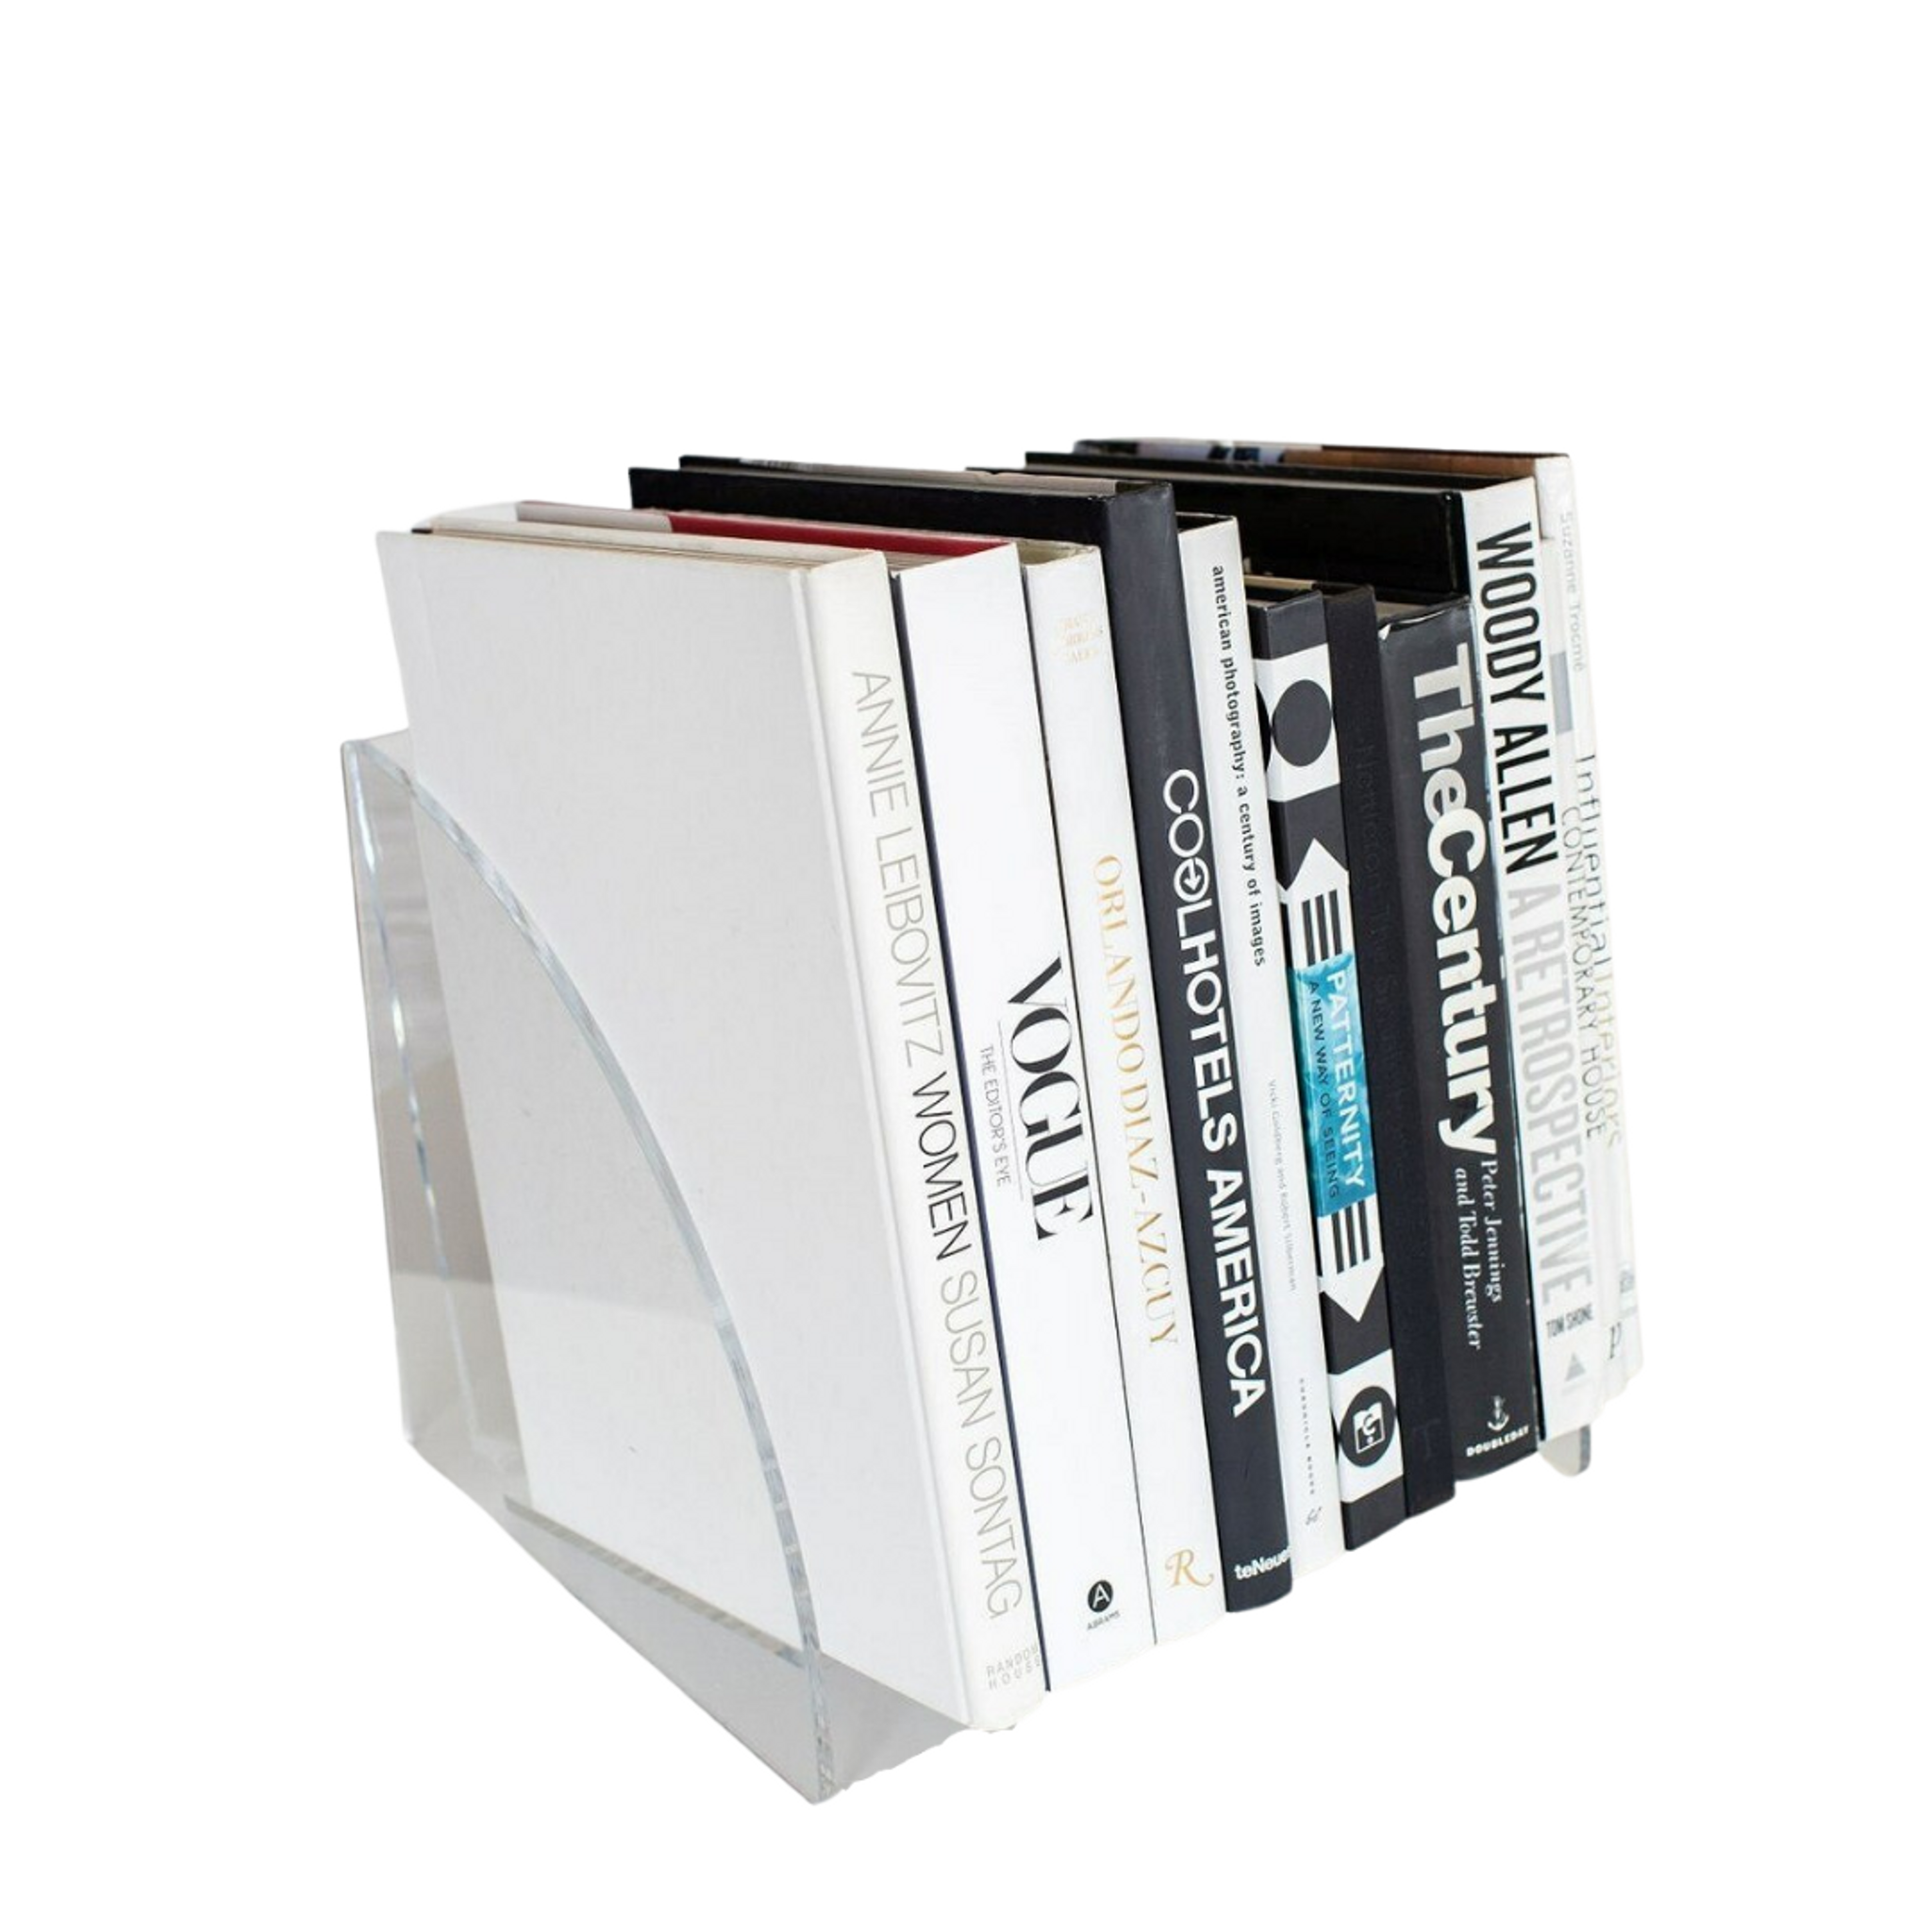 acrylic open book stand cheap book shelf bookcase book storage bin cheap